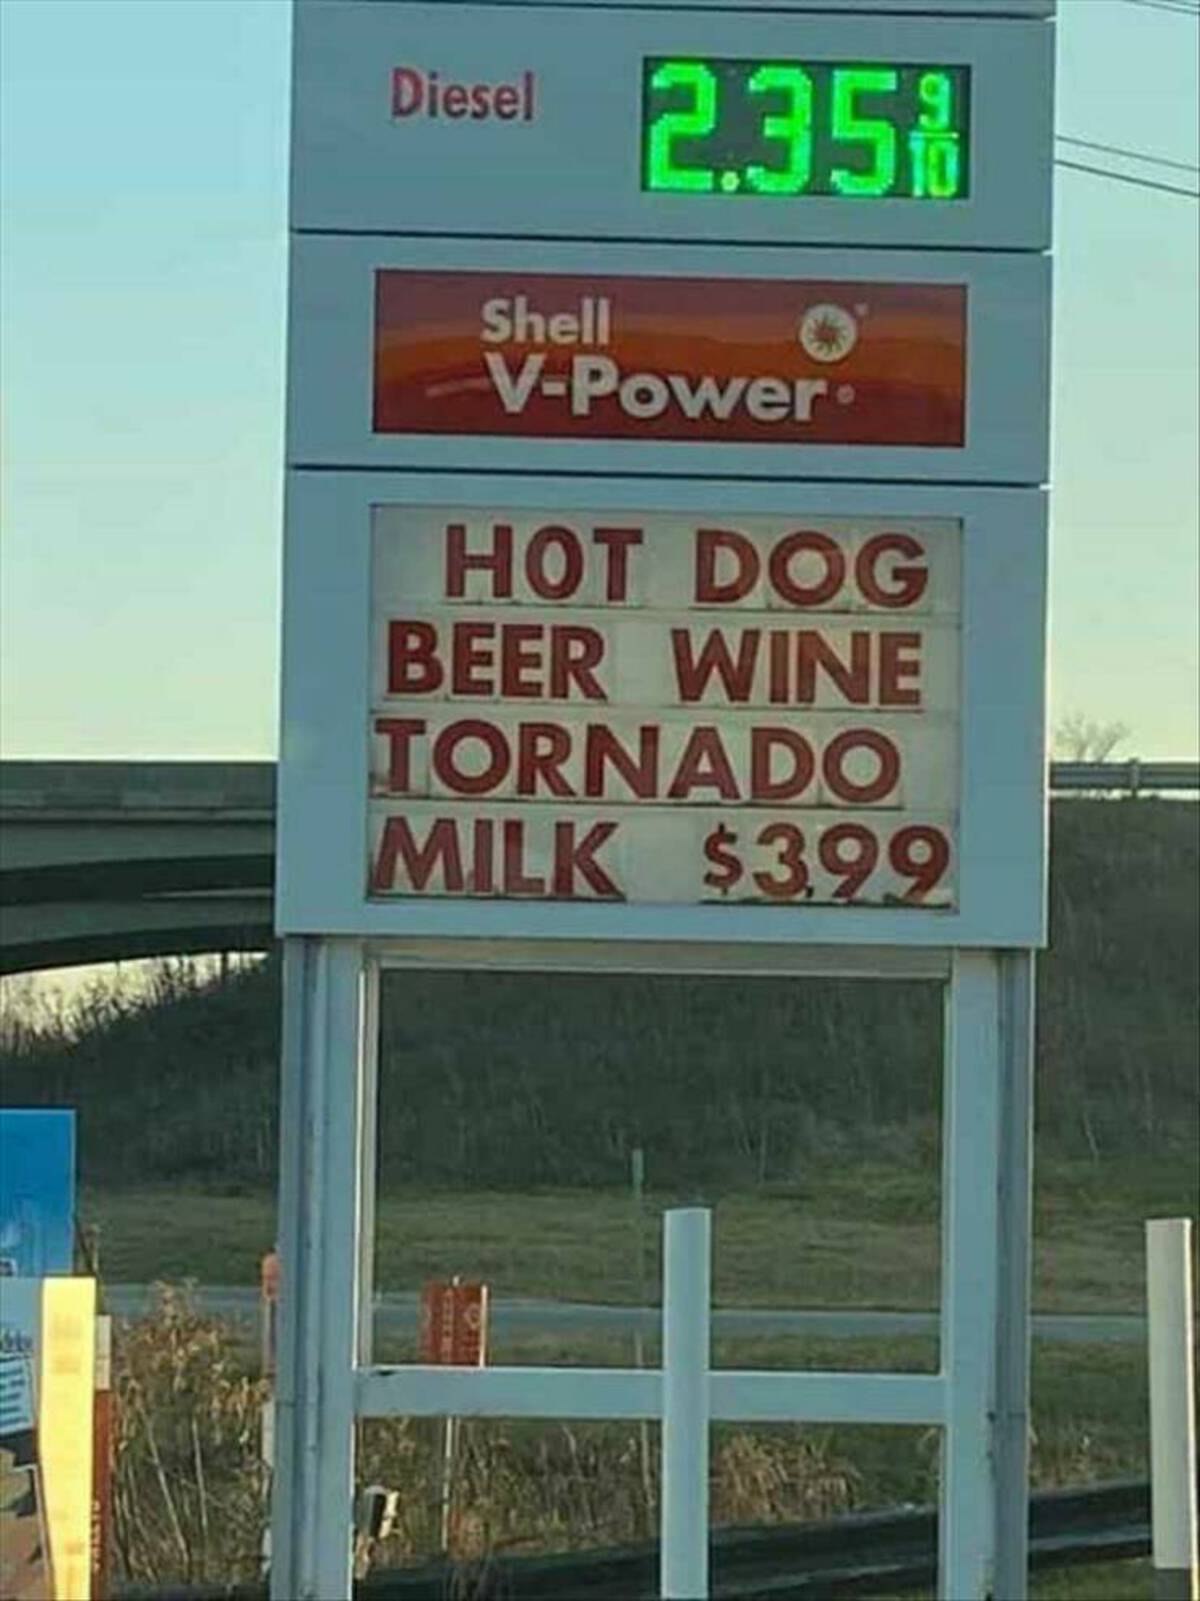 street sign - Diesel 2.35% Shell VPower Hot Dog Beer Wine Tornado Milk $399